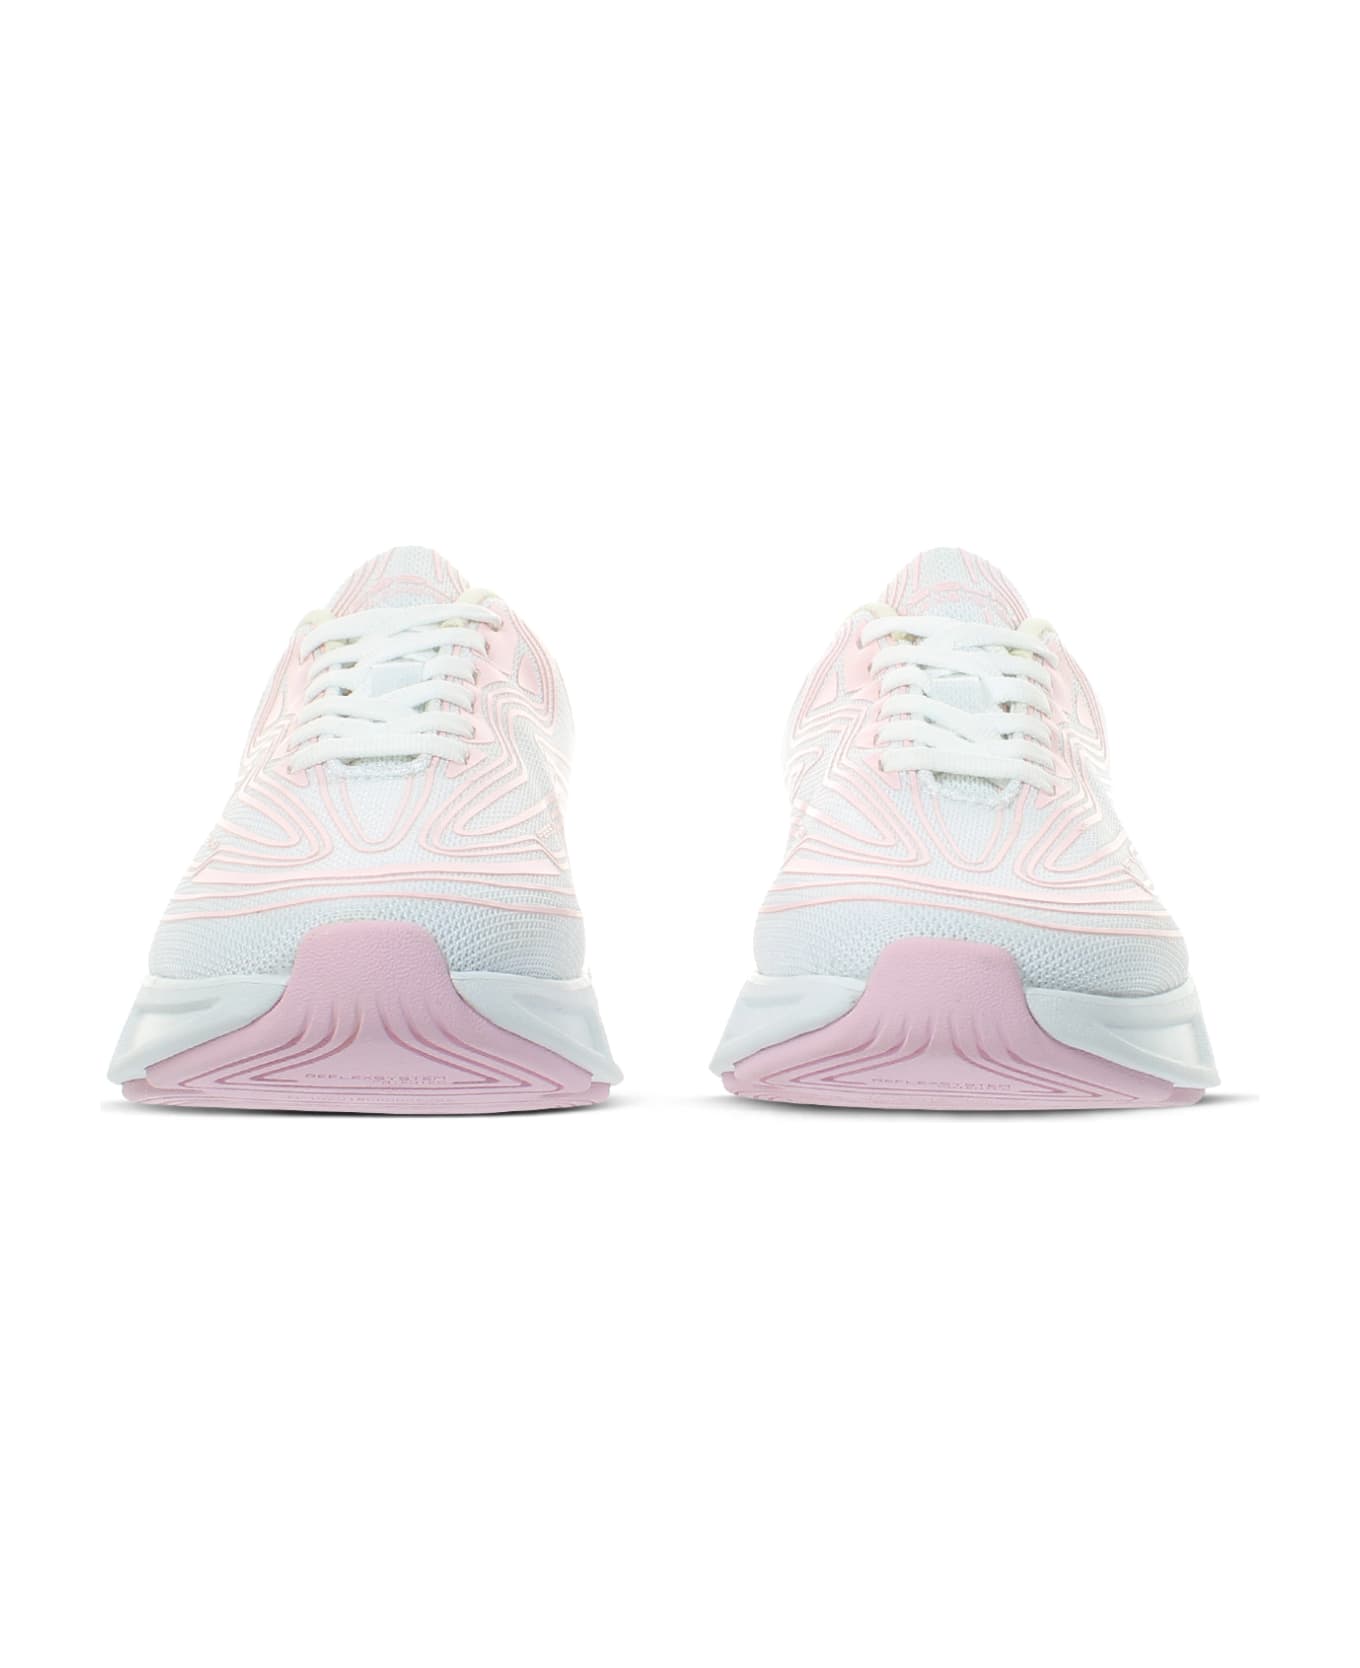 Fessura Runflex #01 - white-pink